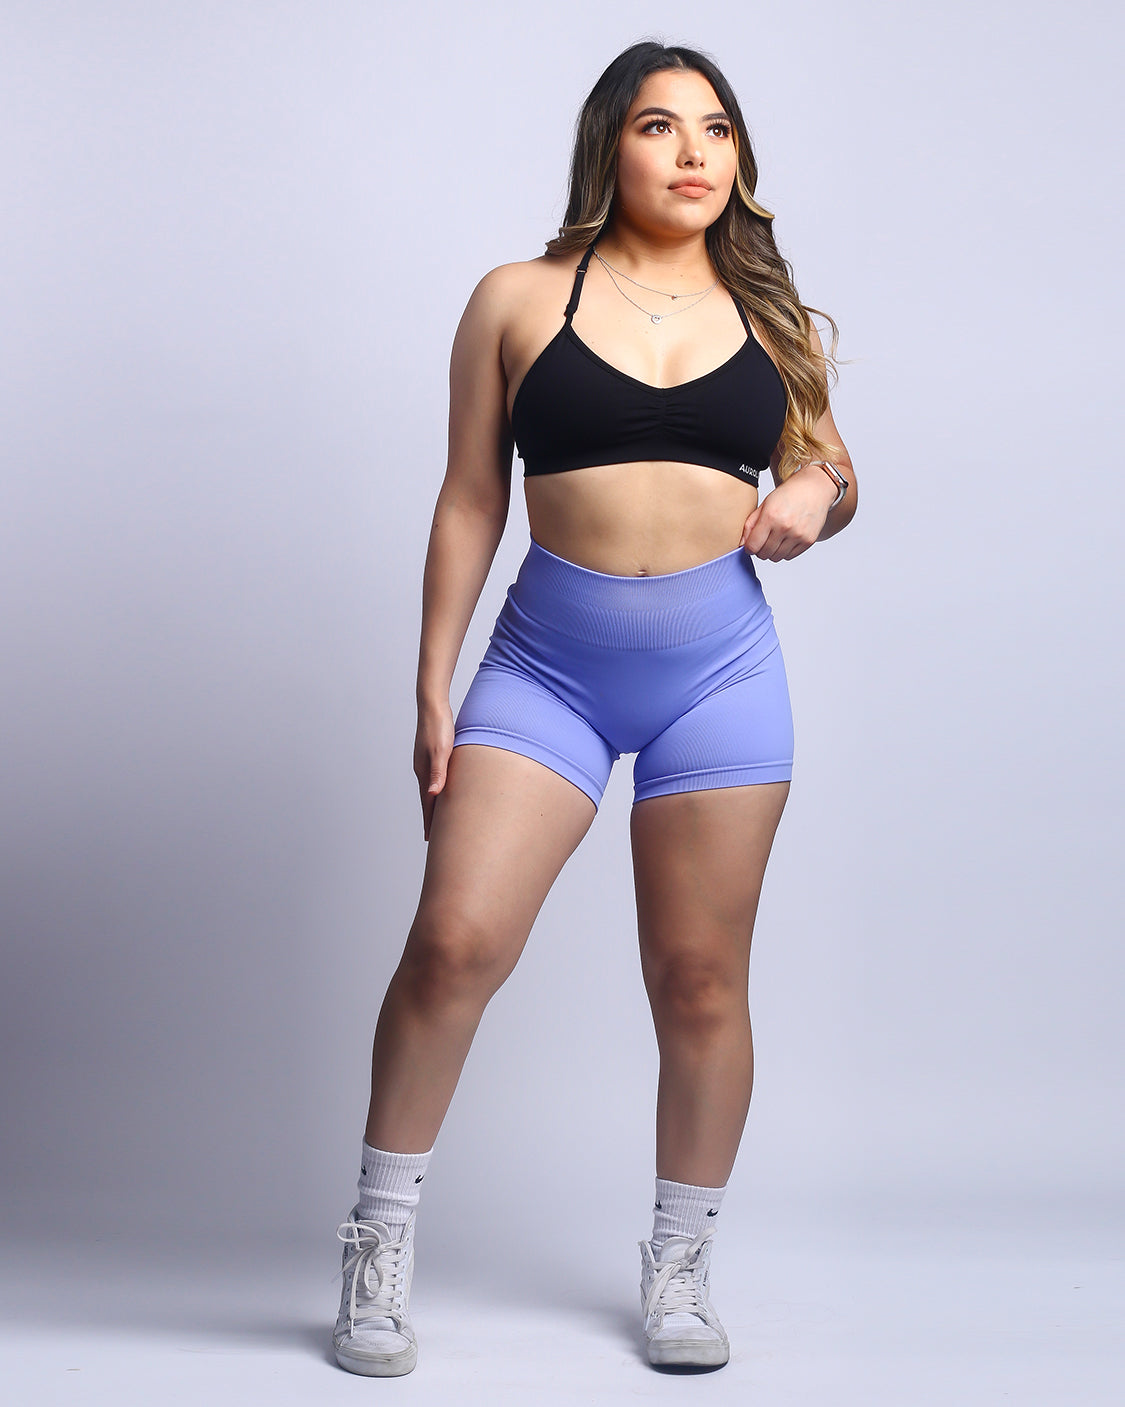 Aurola Black Marl Intensify Workout Shorts Womens Size Large